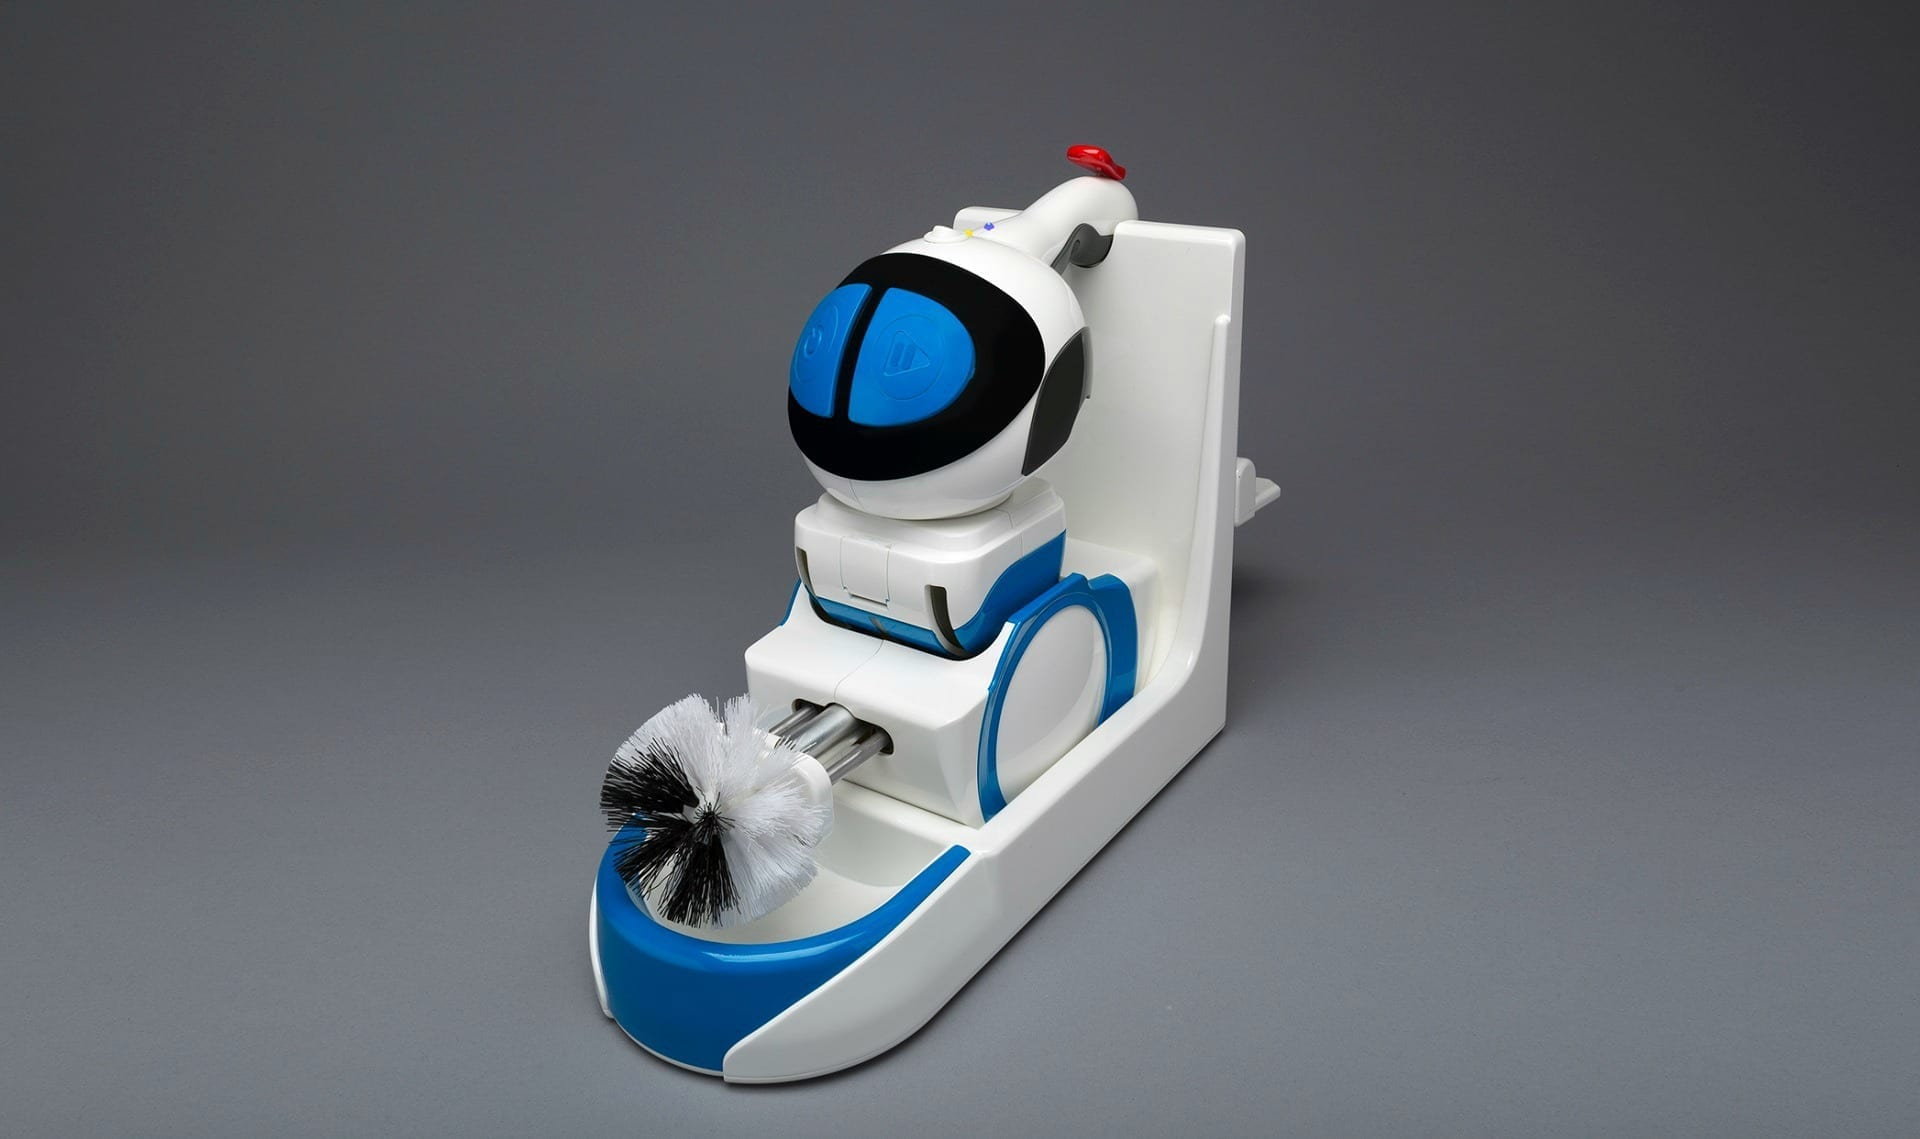 The Giddel toilet cleaning robot nestled inside its charging station.